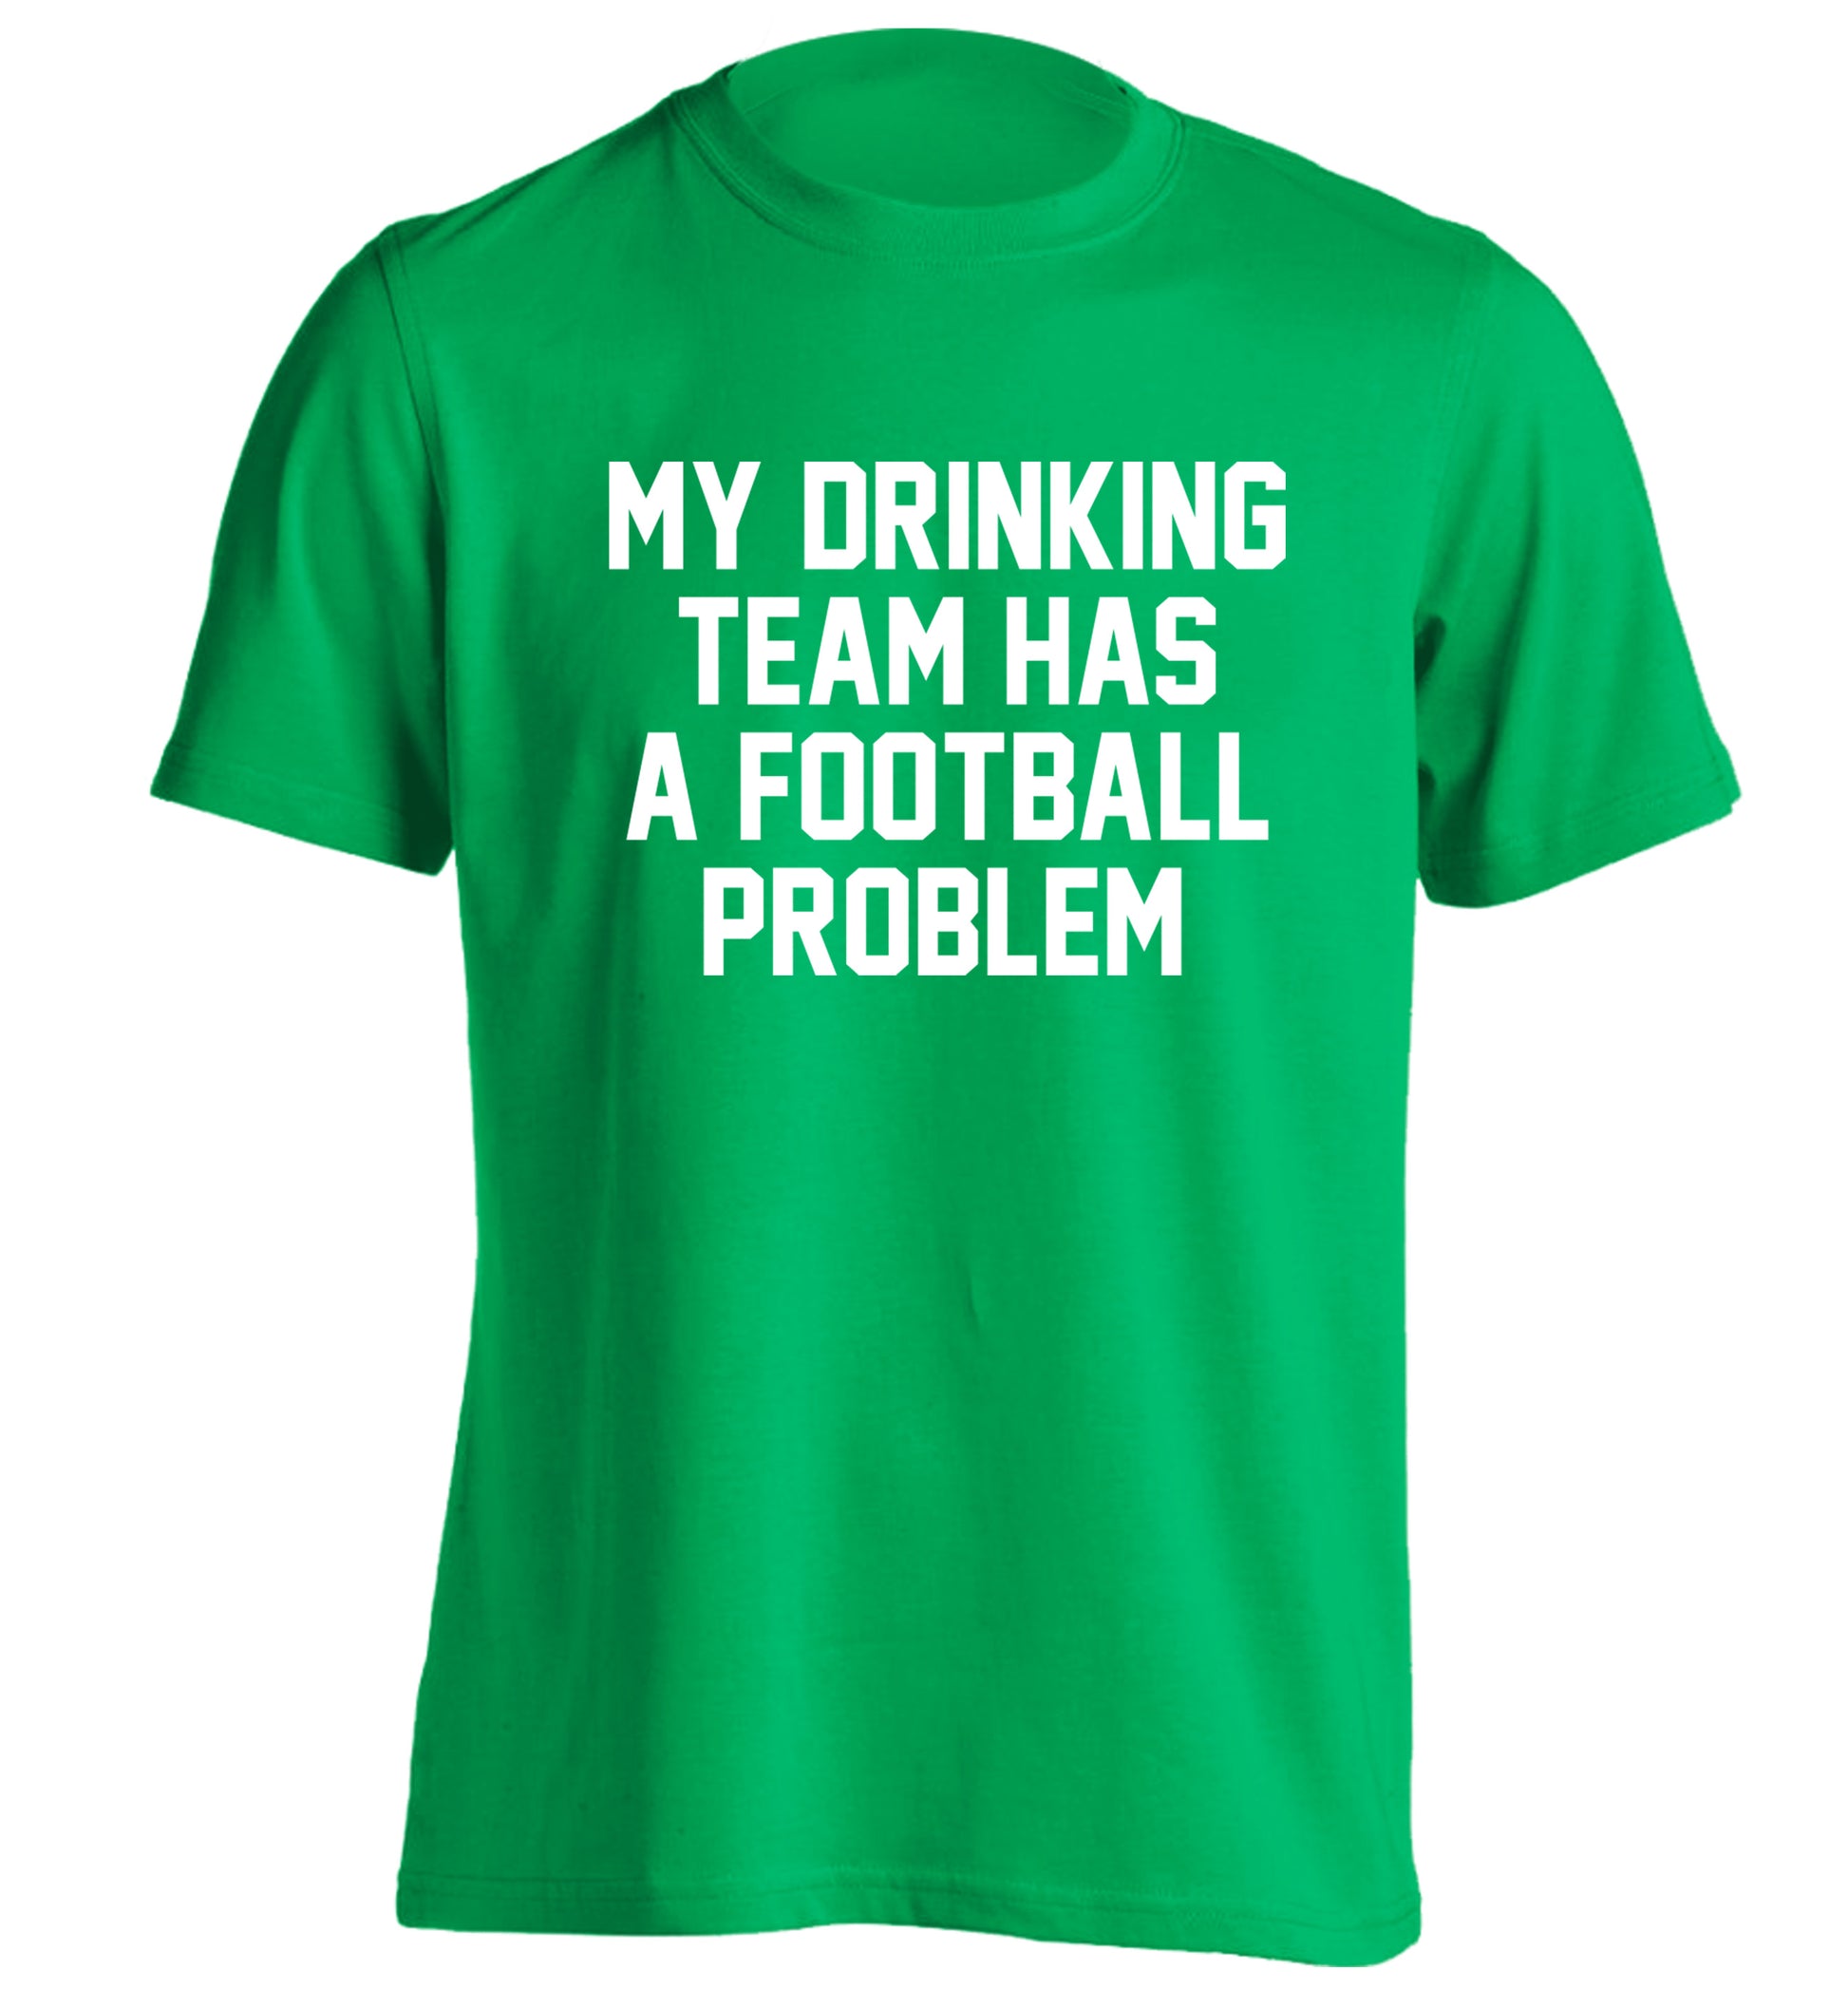 My drinking team has a football problem! adults unisexgreen Tshirt 2XL